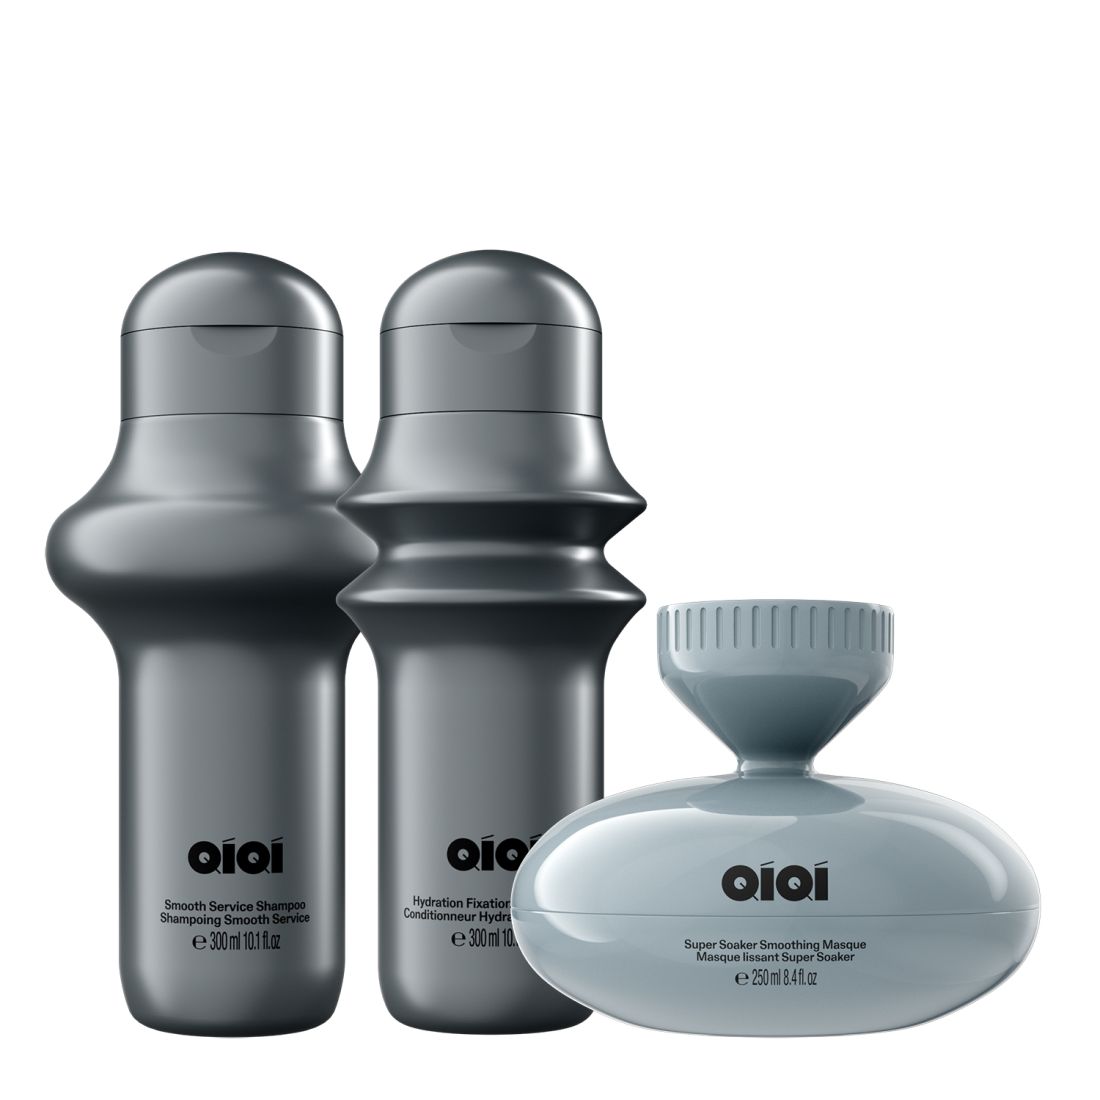 Hydration Fixation Conditioner — QIQI